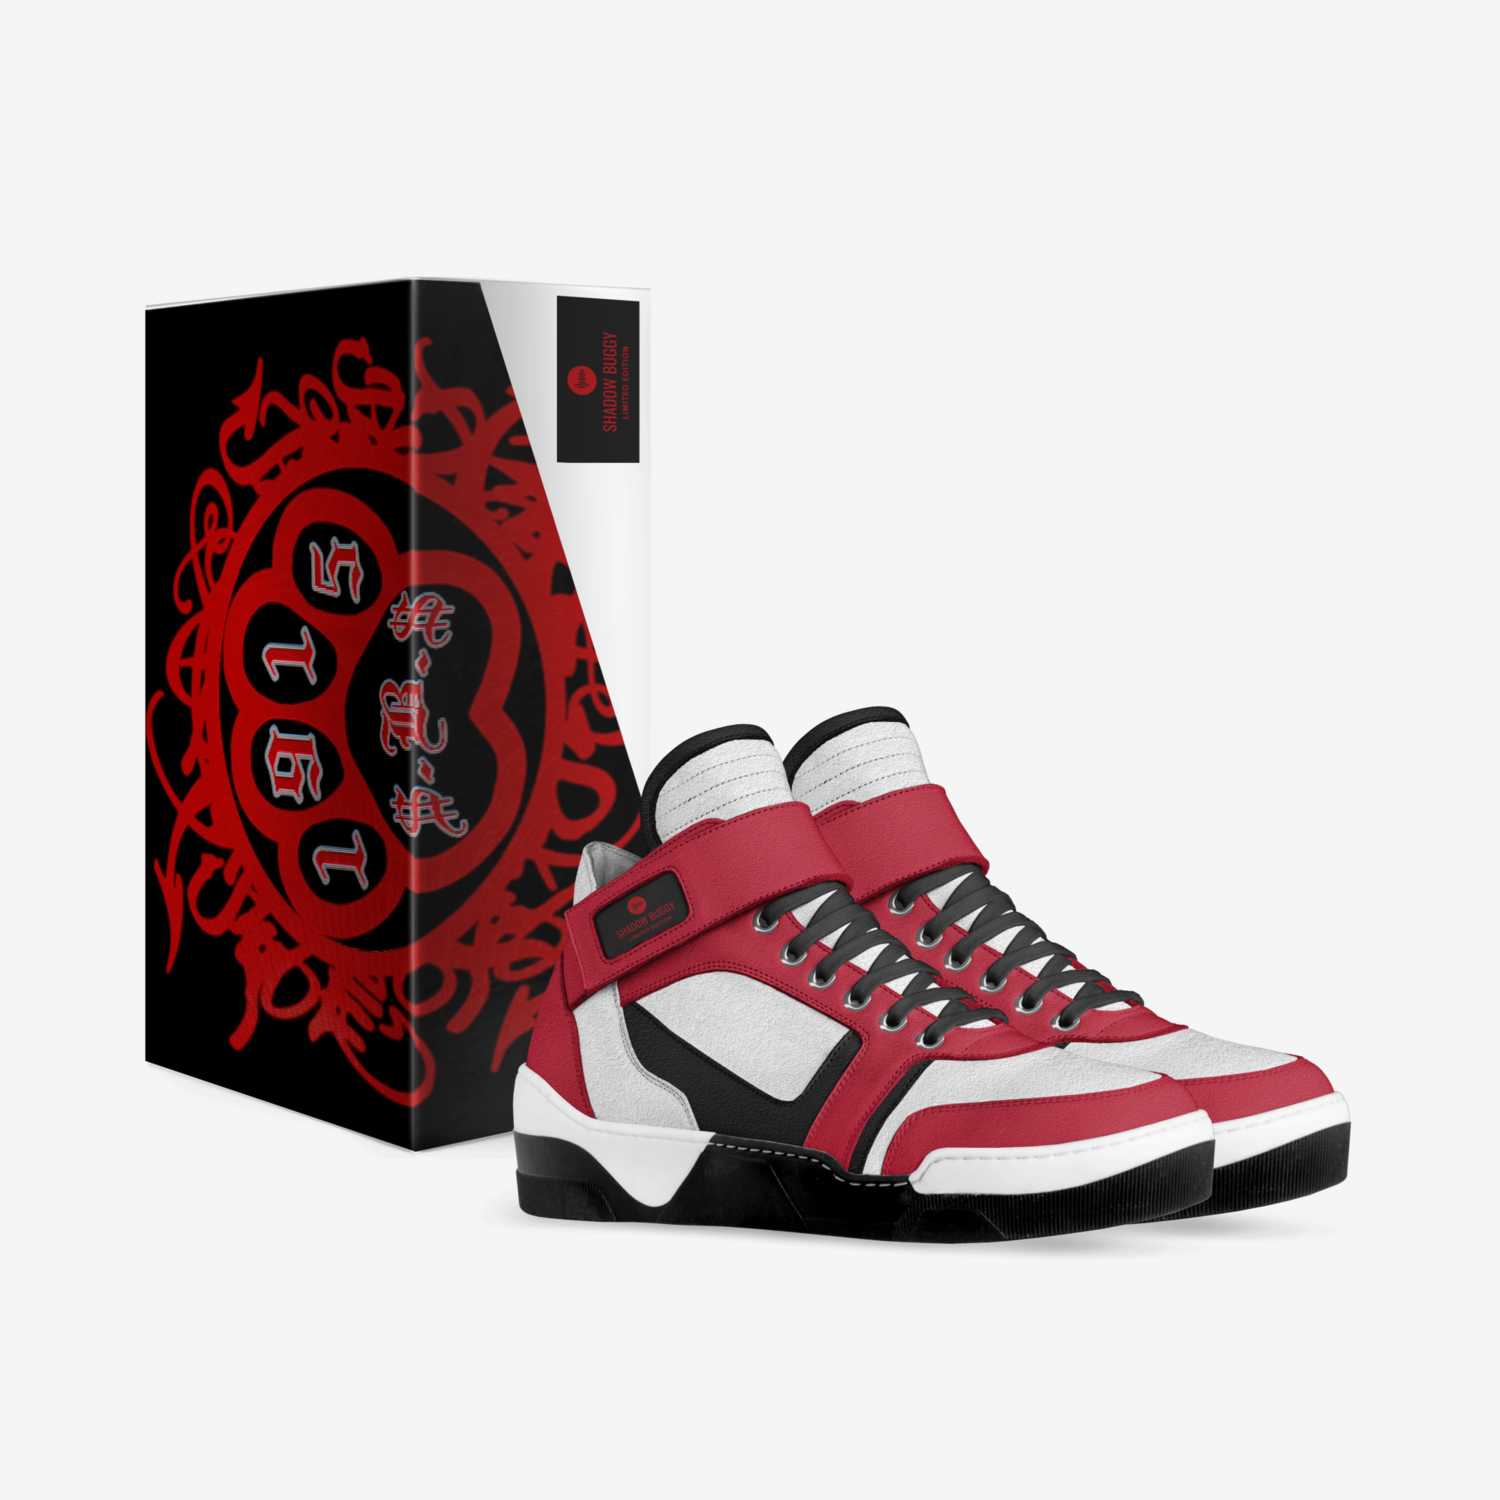 Shadow Buggy custom made in Italy shoes by Joe Jarman | Box view